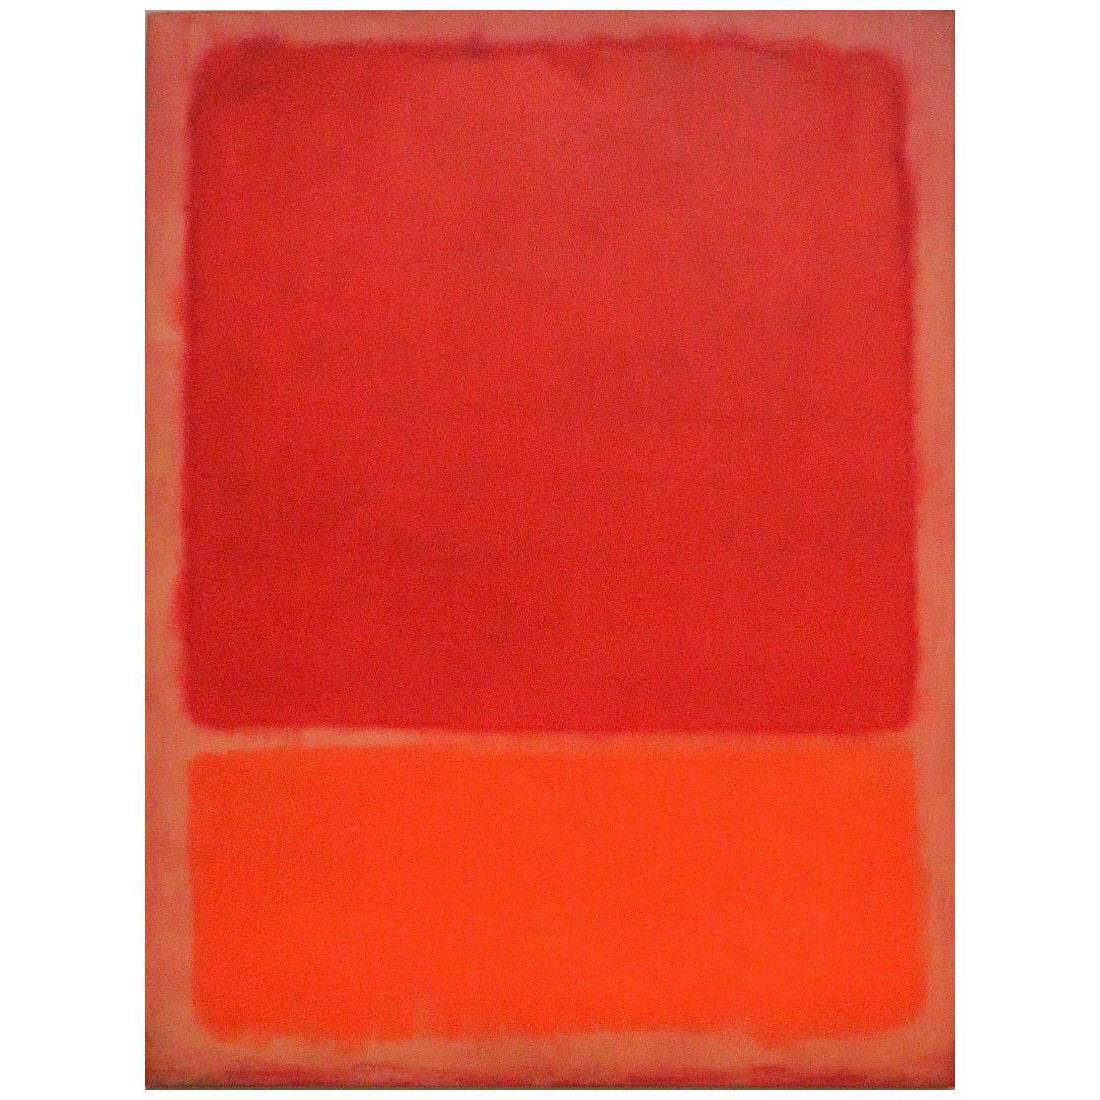 Mark Rothko. Untitled. Red, Orange. 1968